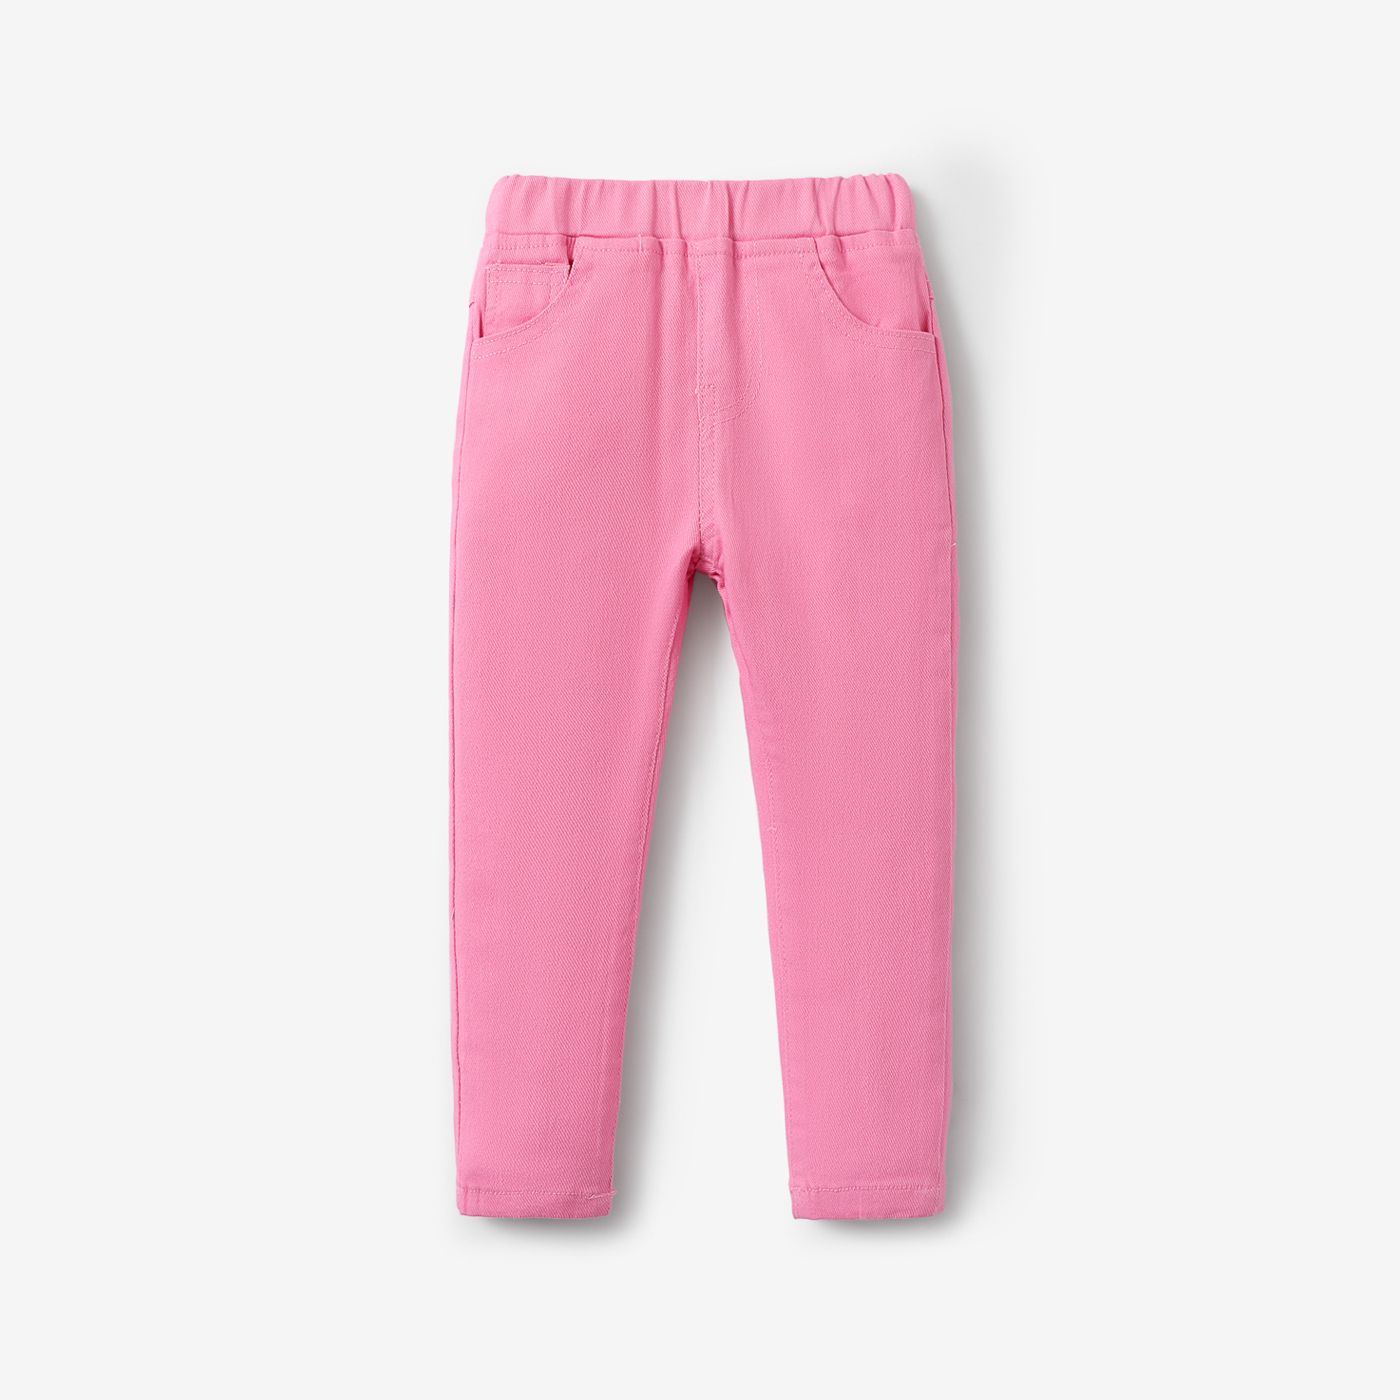 Toddler Girl Solid Color Bottom/Jean